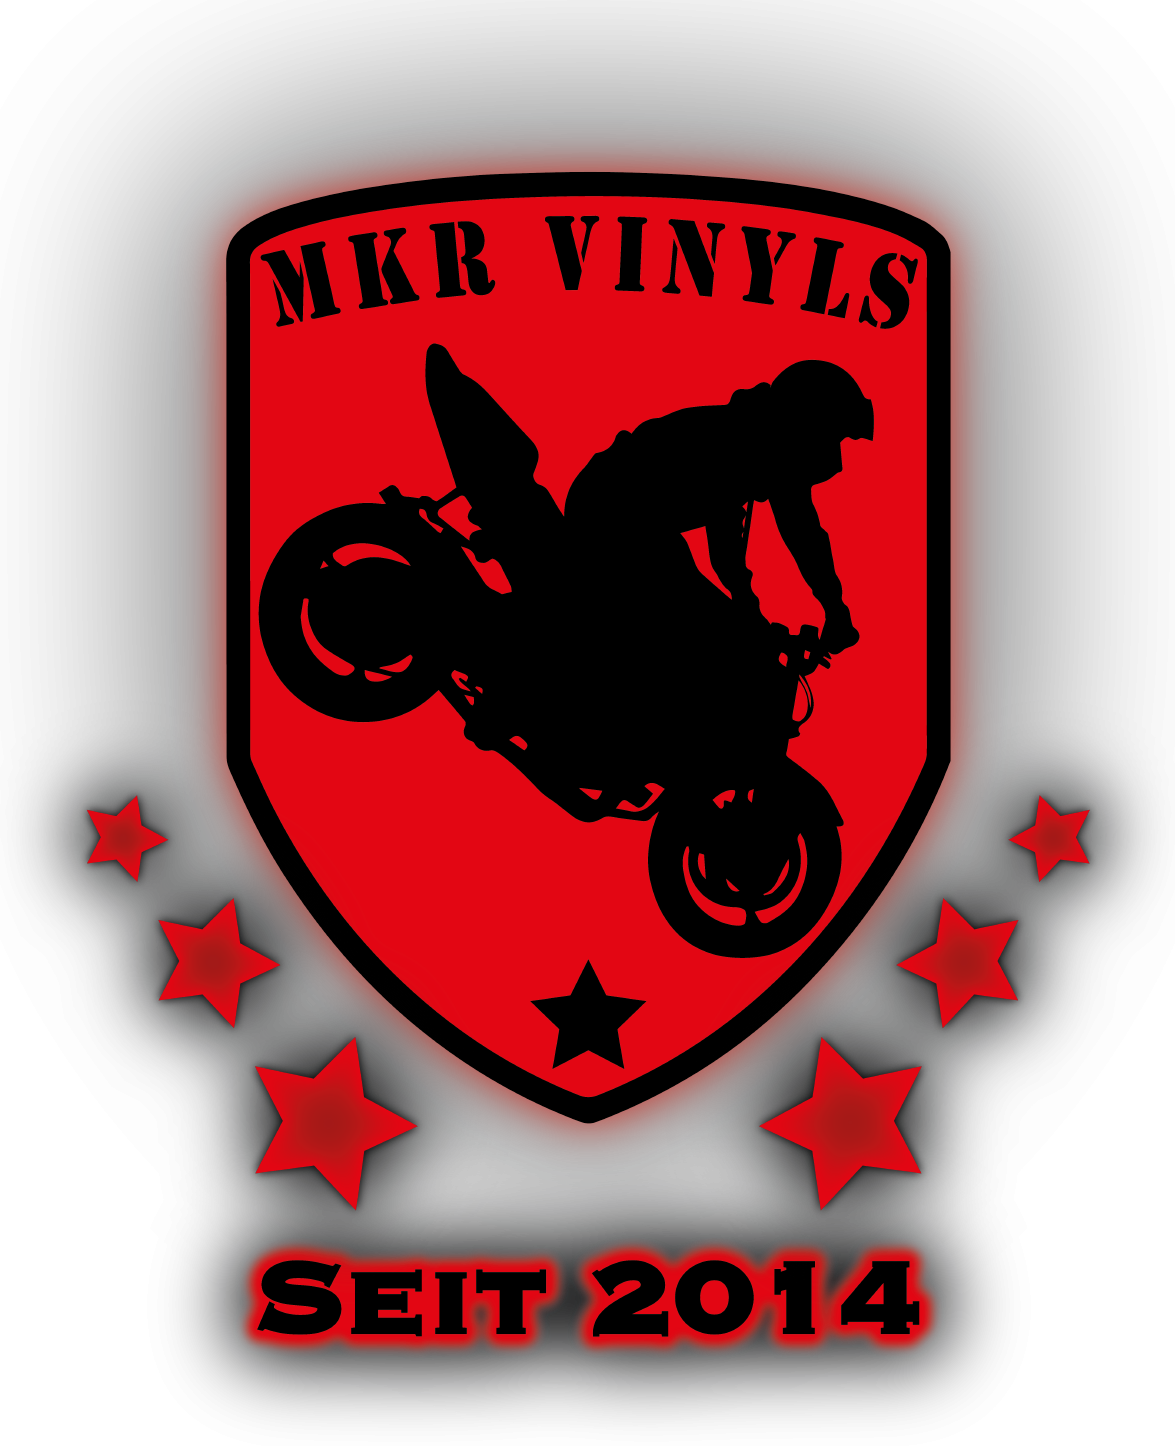 MKR Vinyls